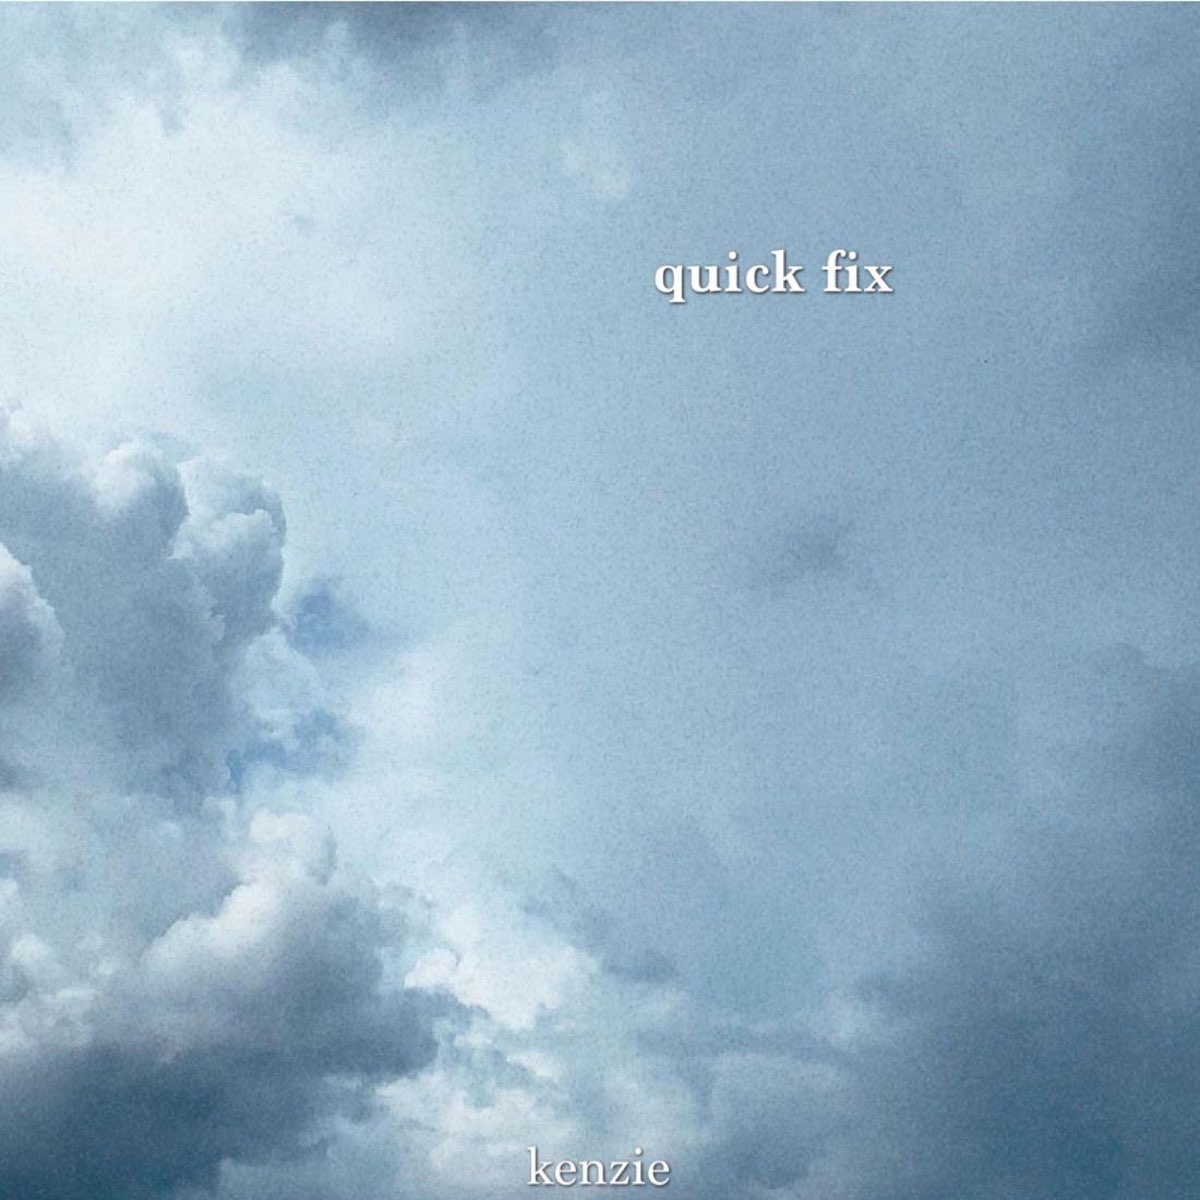 ‎Quick Fix - Single - Album by kenzie - Apple Music